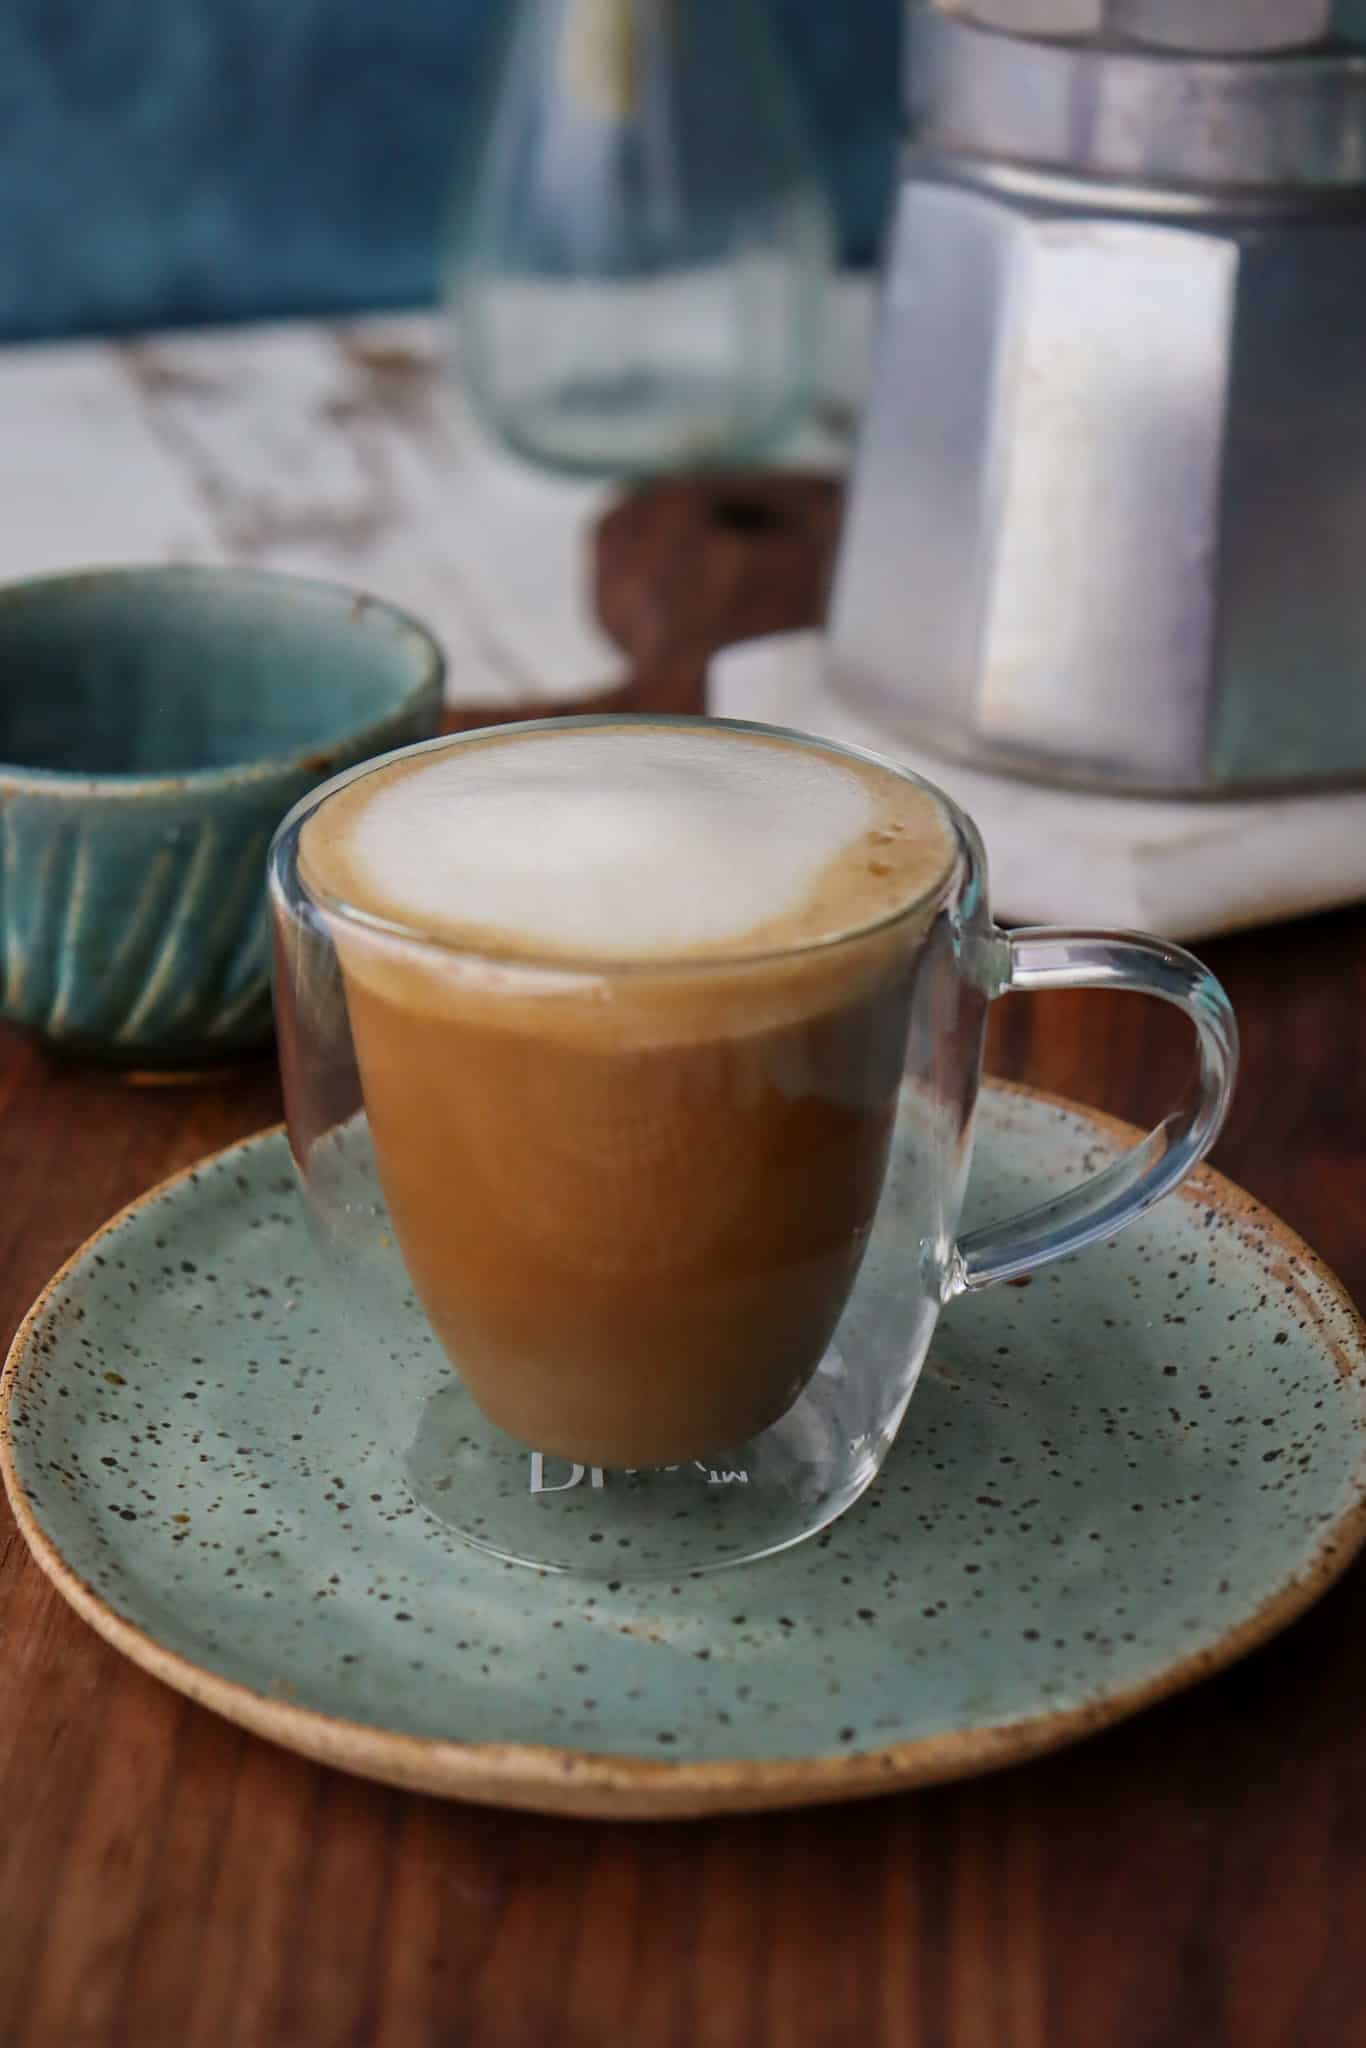 Stove Top Espresso Cuban Coffee Maker pot Cappuccino Latte 3 Cup